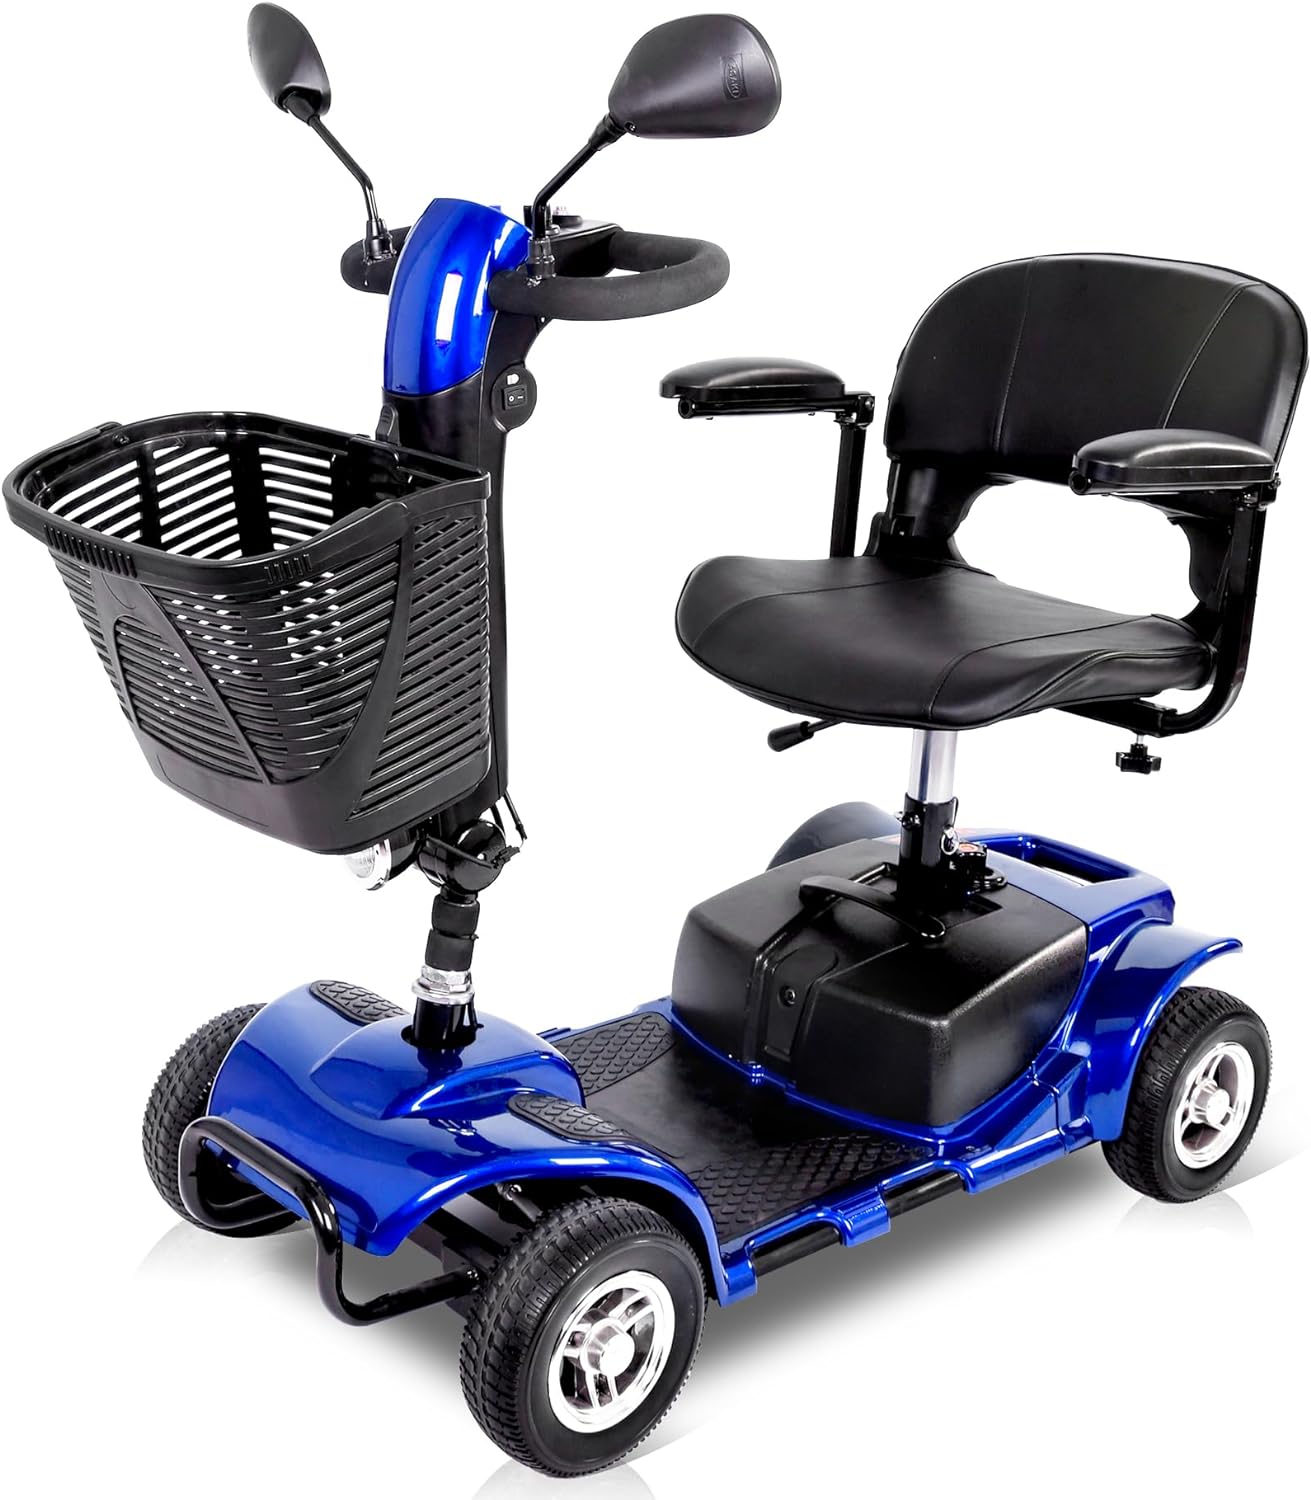 VOCIC Mobility Scooter Review